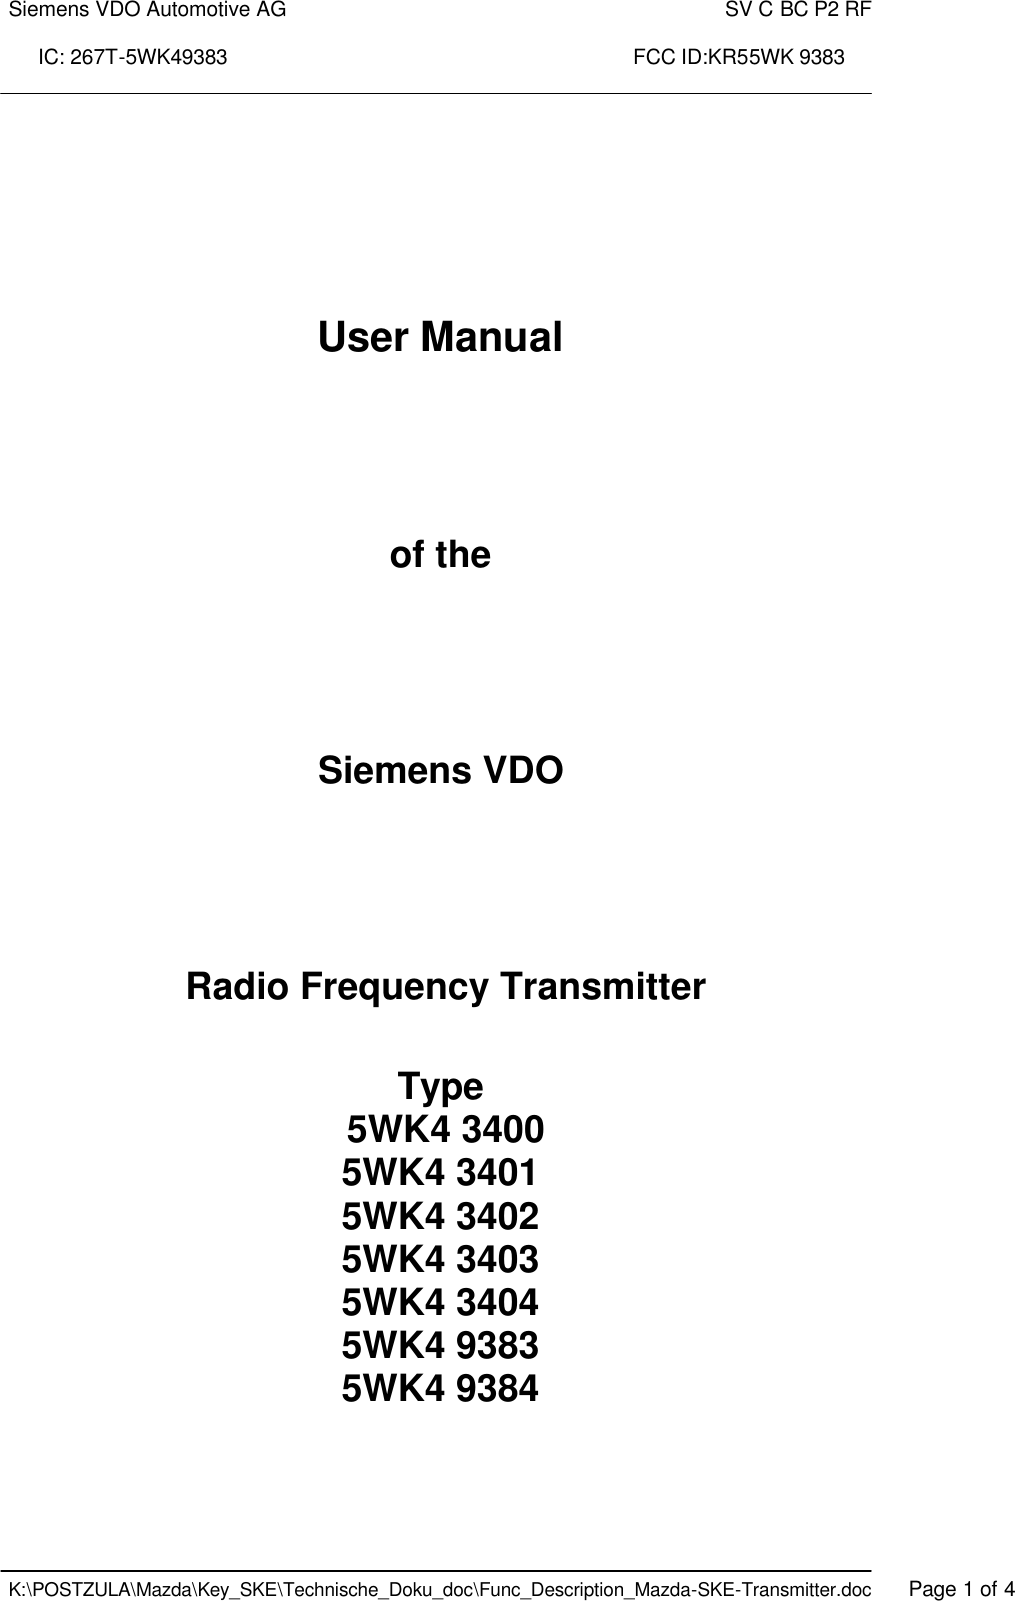 Siemens VDO Automotive AG    SV C BC P2 RF  IC: 267T-5WK49383                                                                      FCC ID:KR55WK 9383    K:\POSTZULA\Mazda\Key_SKE\Technische_Doku_doc\Func_Description_Mazda-SKE-Transmitter.doc   Page 1 of 4     User Manual     of the     Siemens VDO     Radio Frequency Transmitter   Type  5WK4 3400 5WK4 3401 5WK4 3402 5WK4 3403 5WK4 3404 5WK4 9383 5WK4 9384    